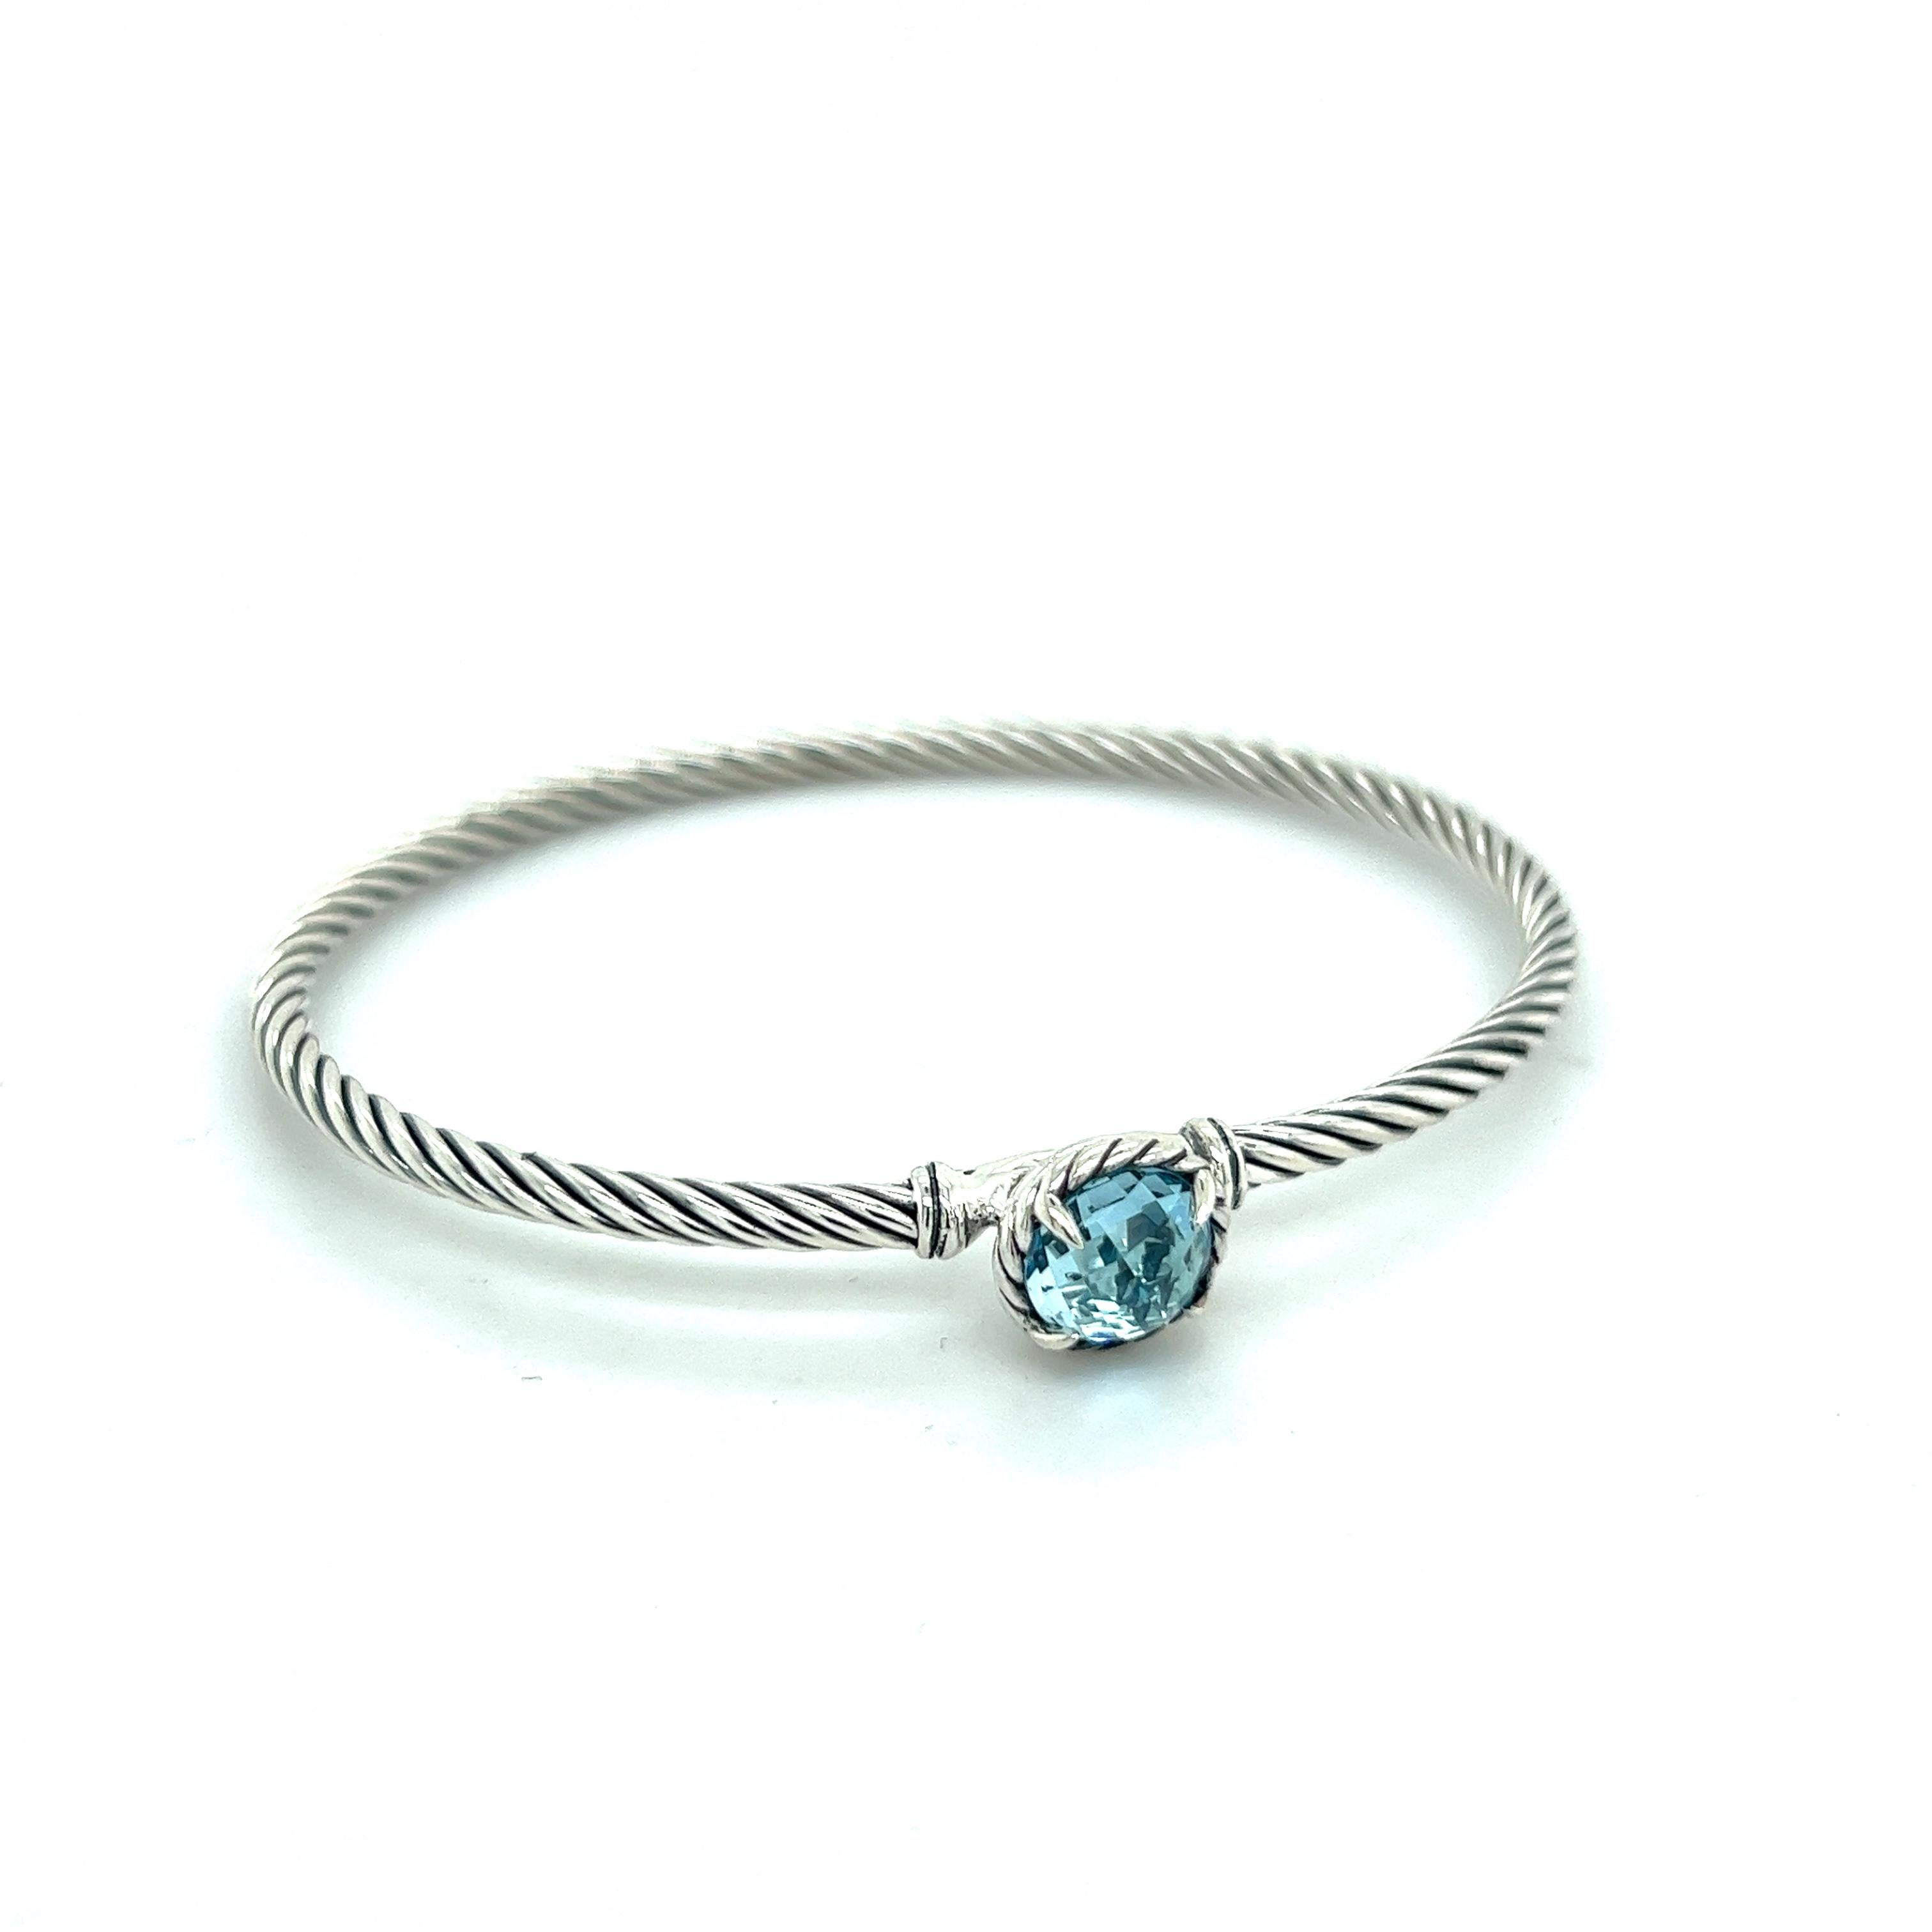 Authentic David Yurman Estate Blue Topaz Petite Chantelaine Bracelet Size 7.5